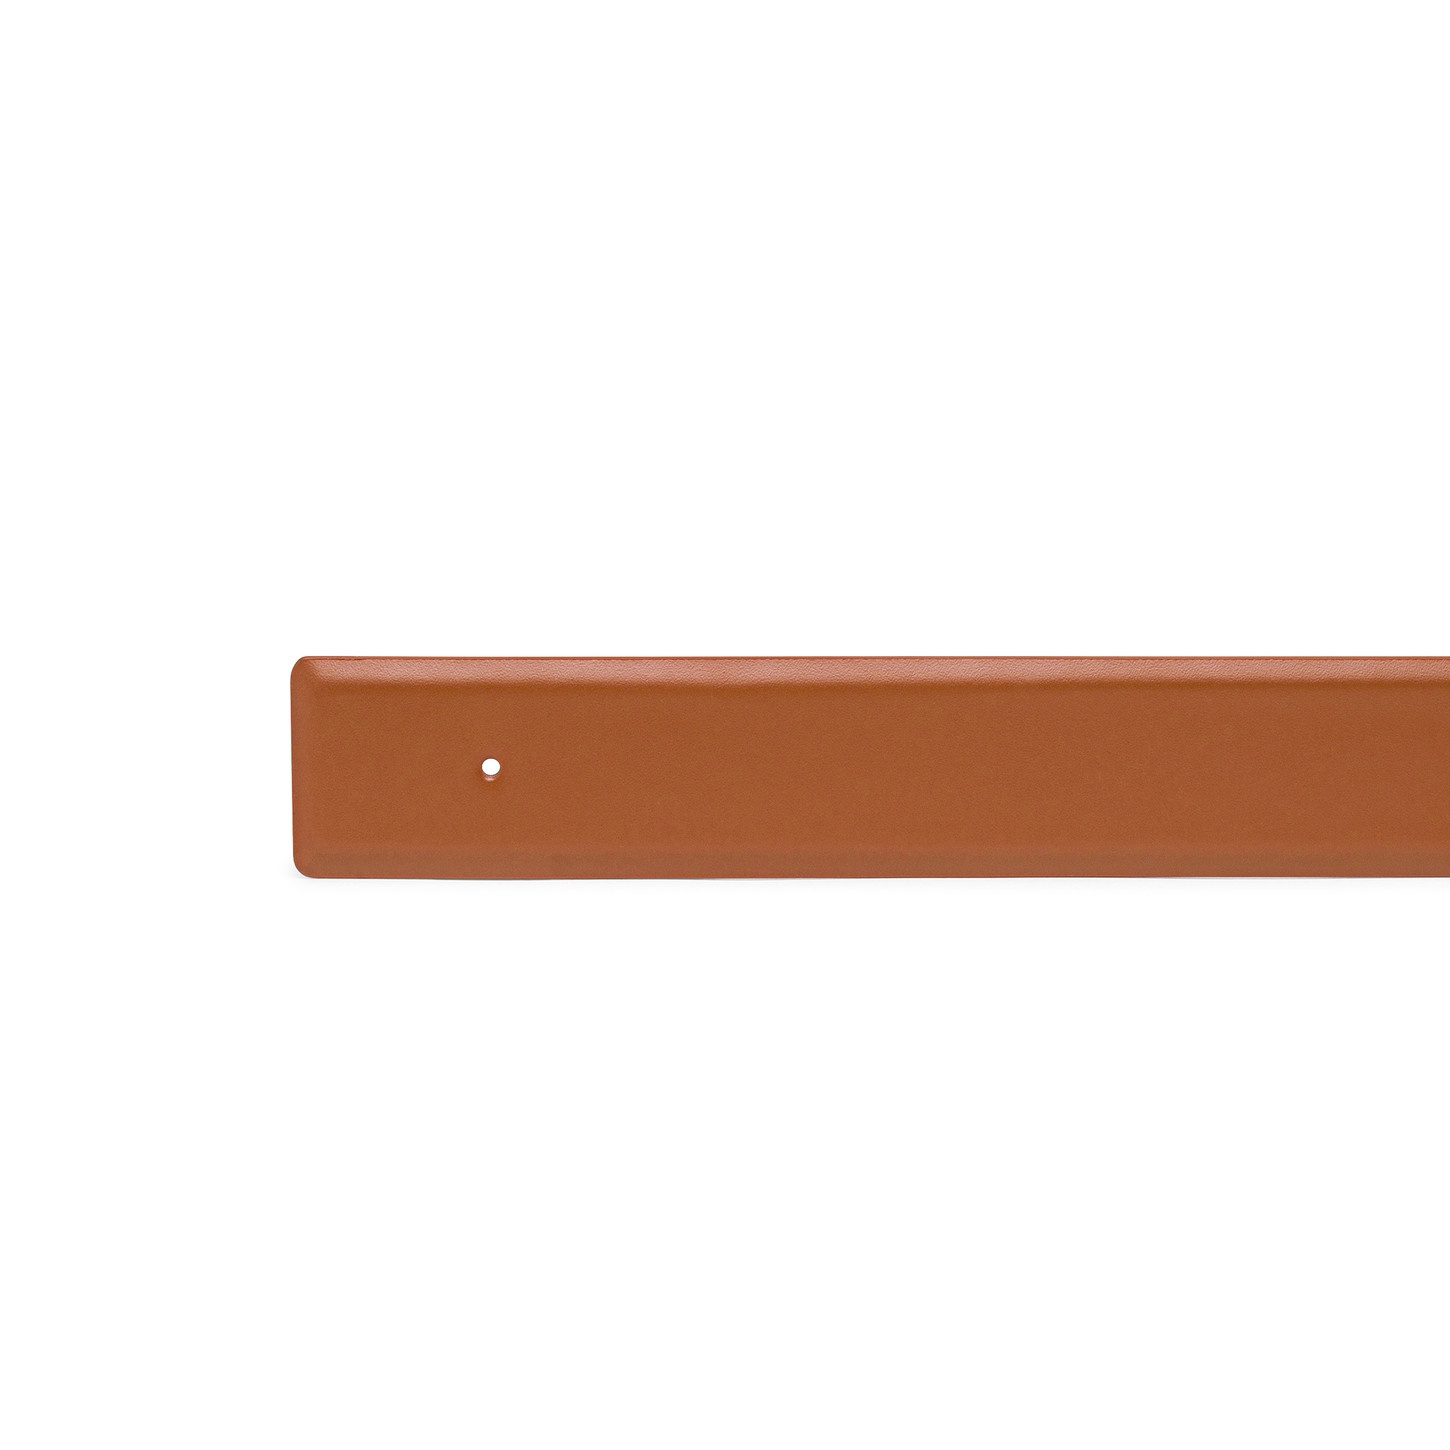 Brown leather belt strap - 4